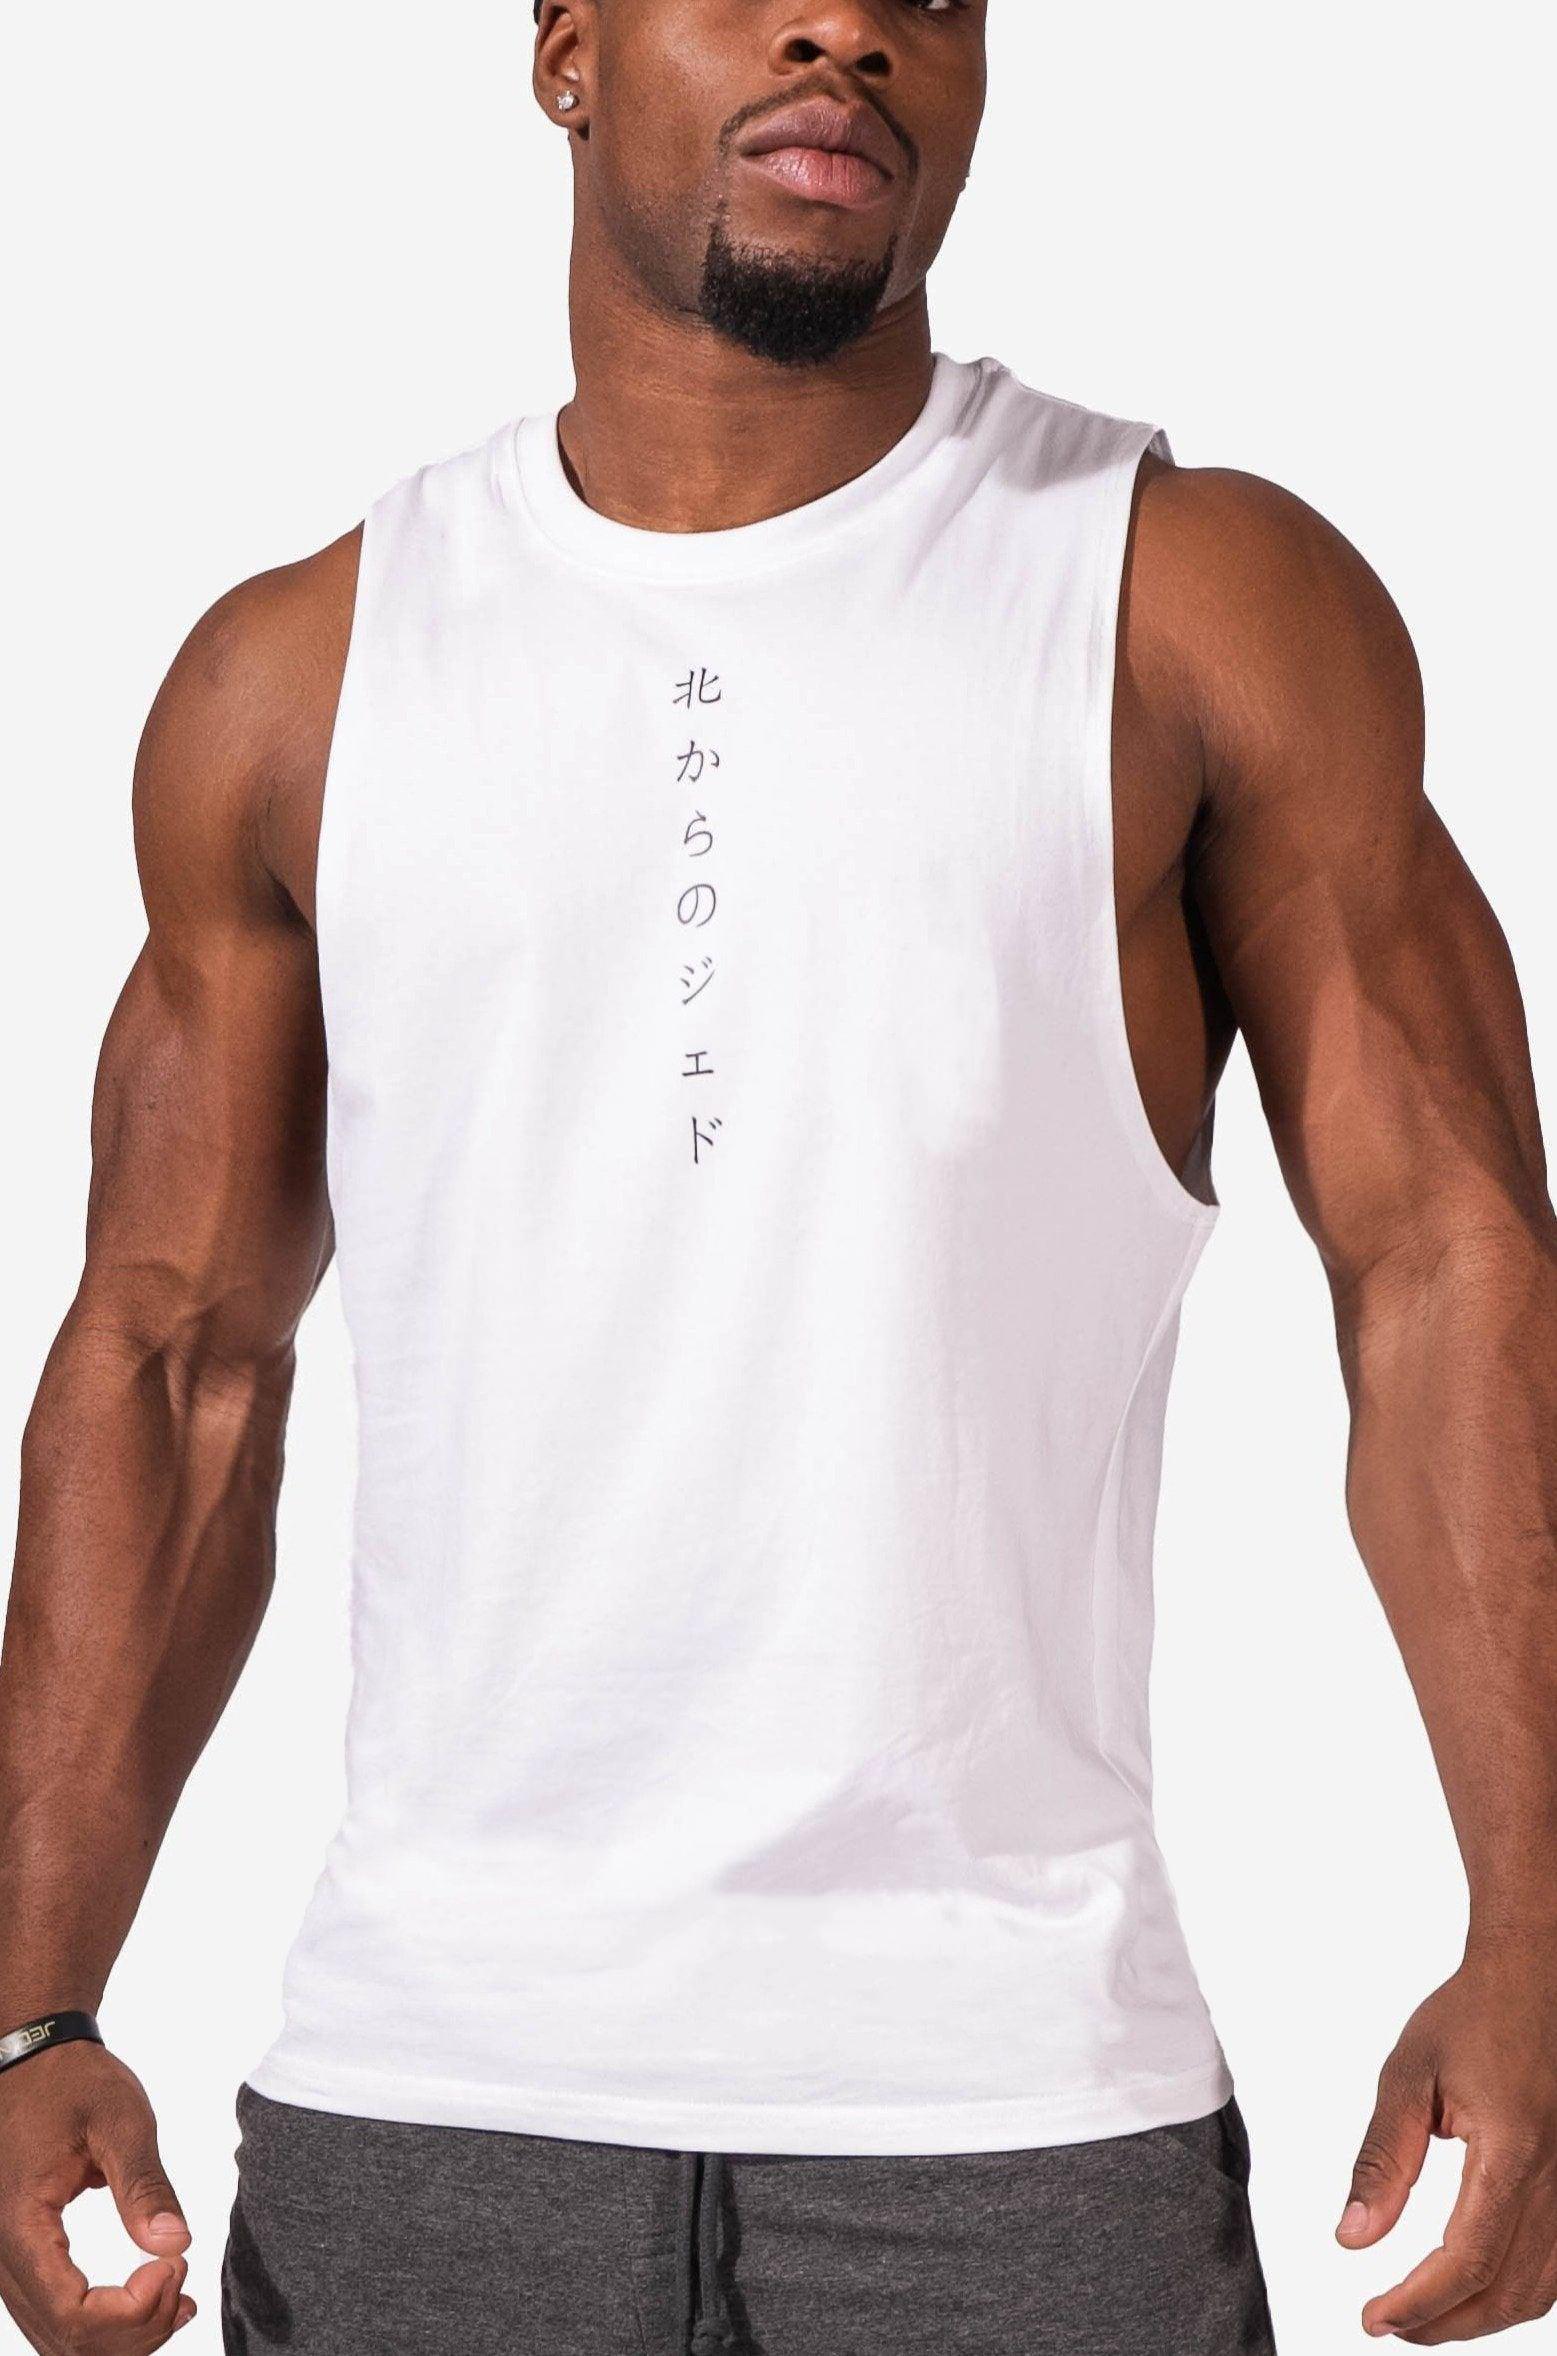 Workout Tank Tops for Men | Bodybuilding & Fitness Gym Wear| Jed North XXXL / White